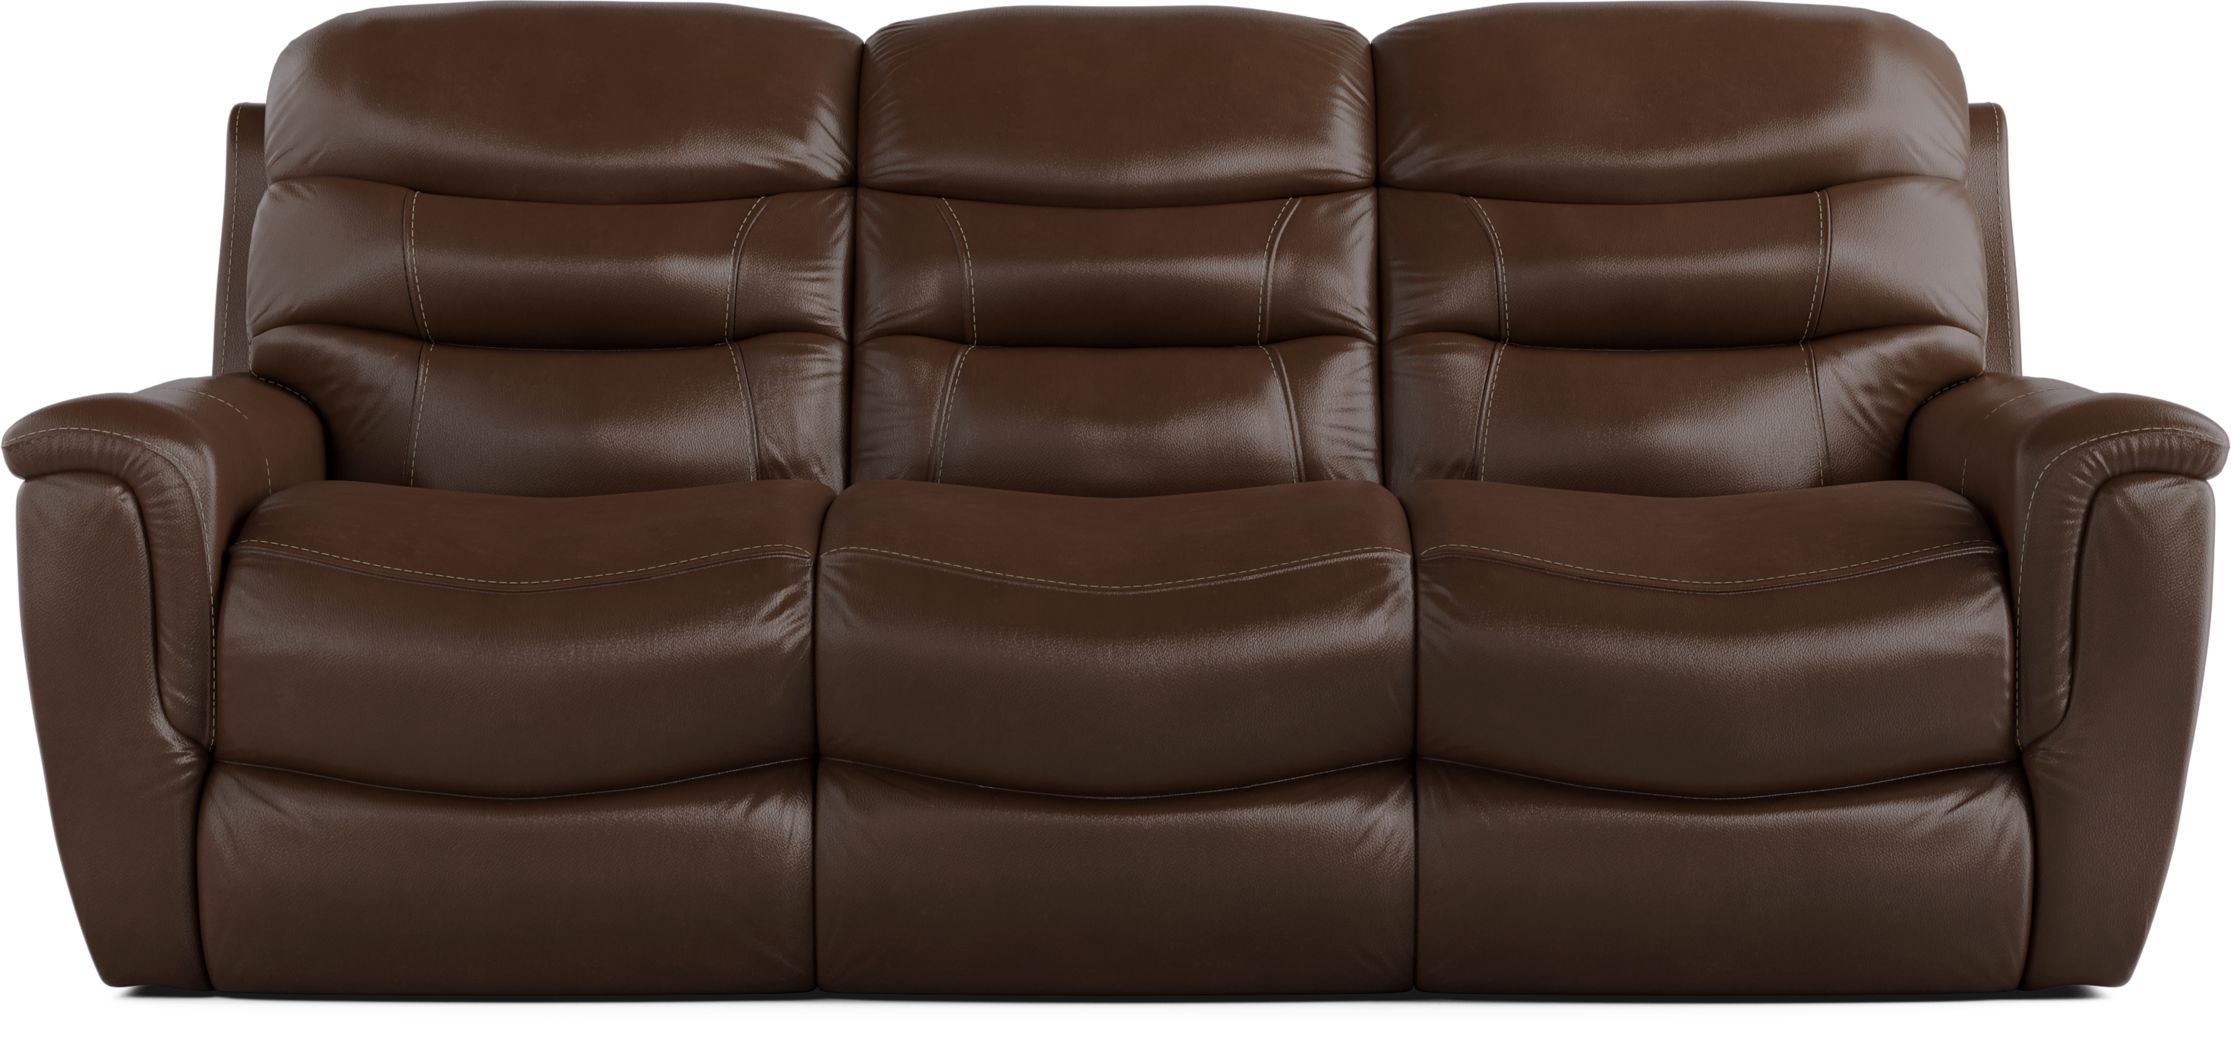 sabella navy leather reclining sofa